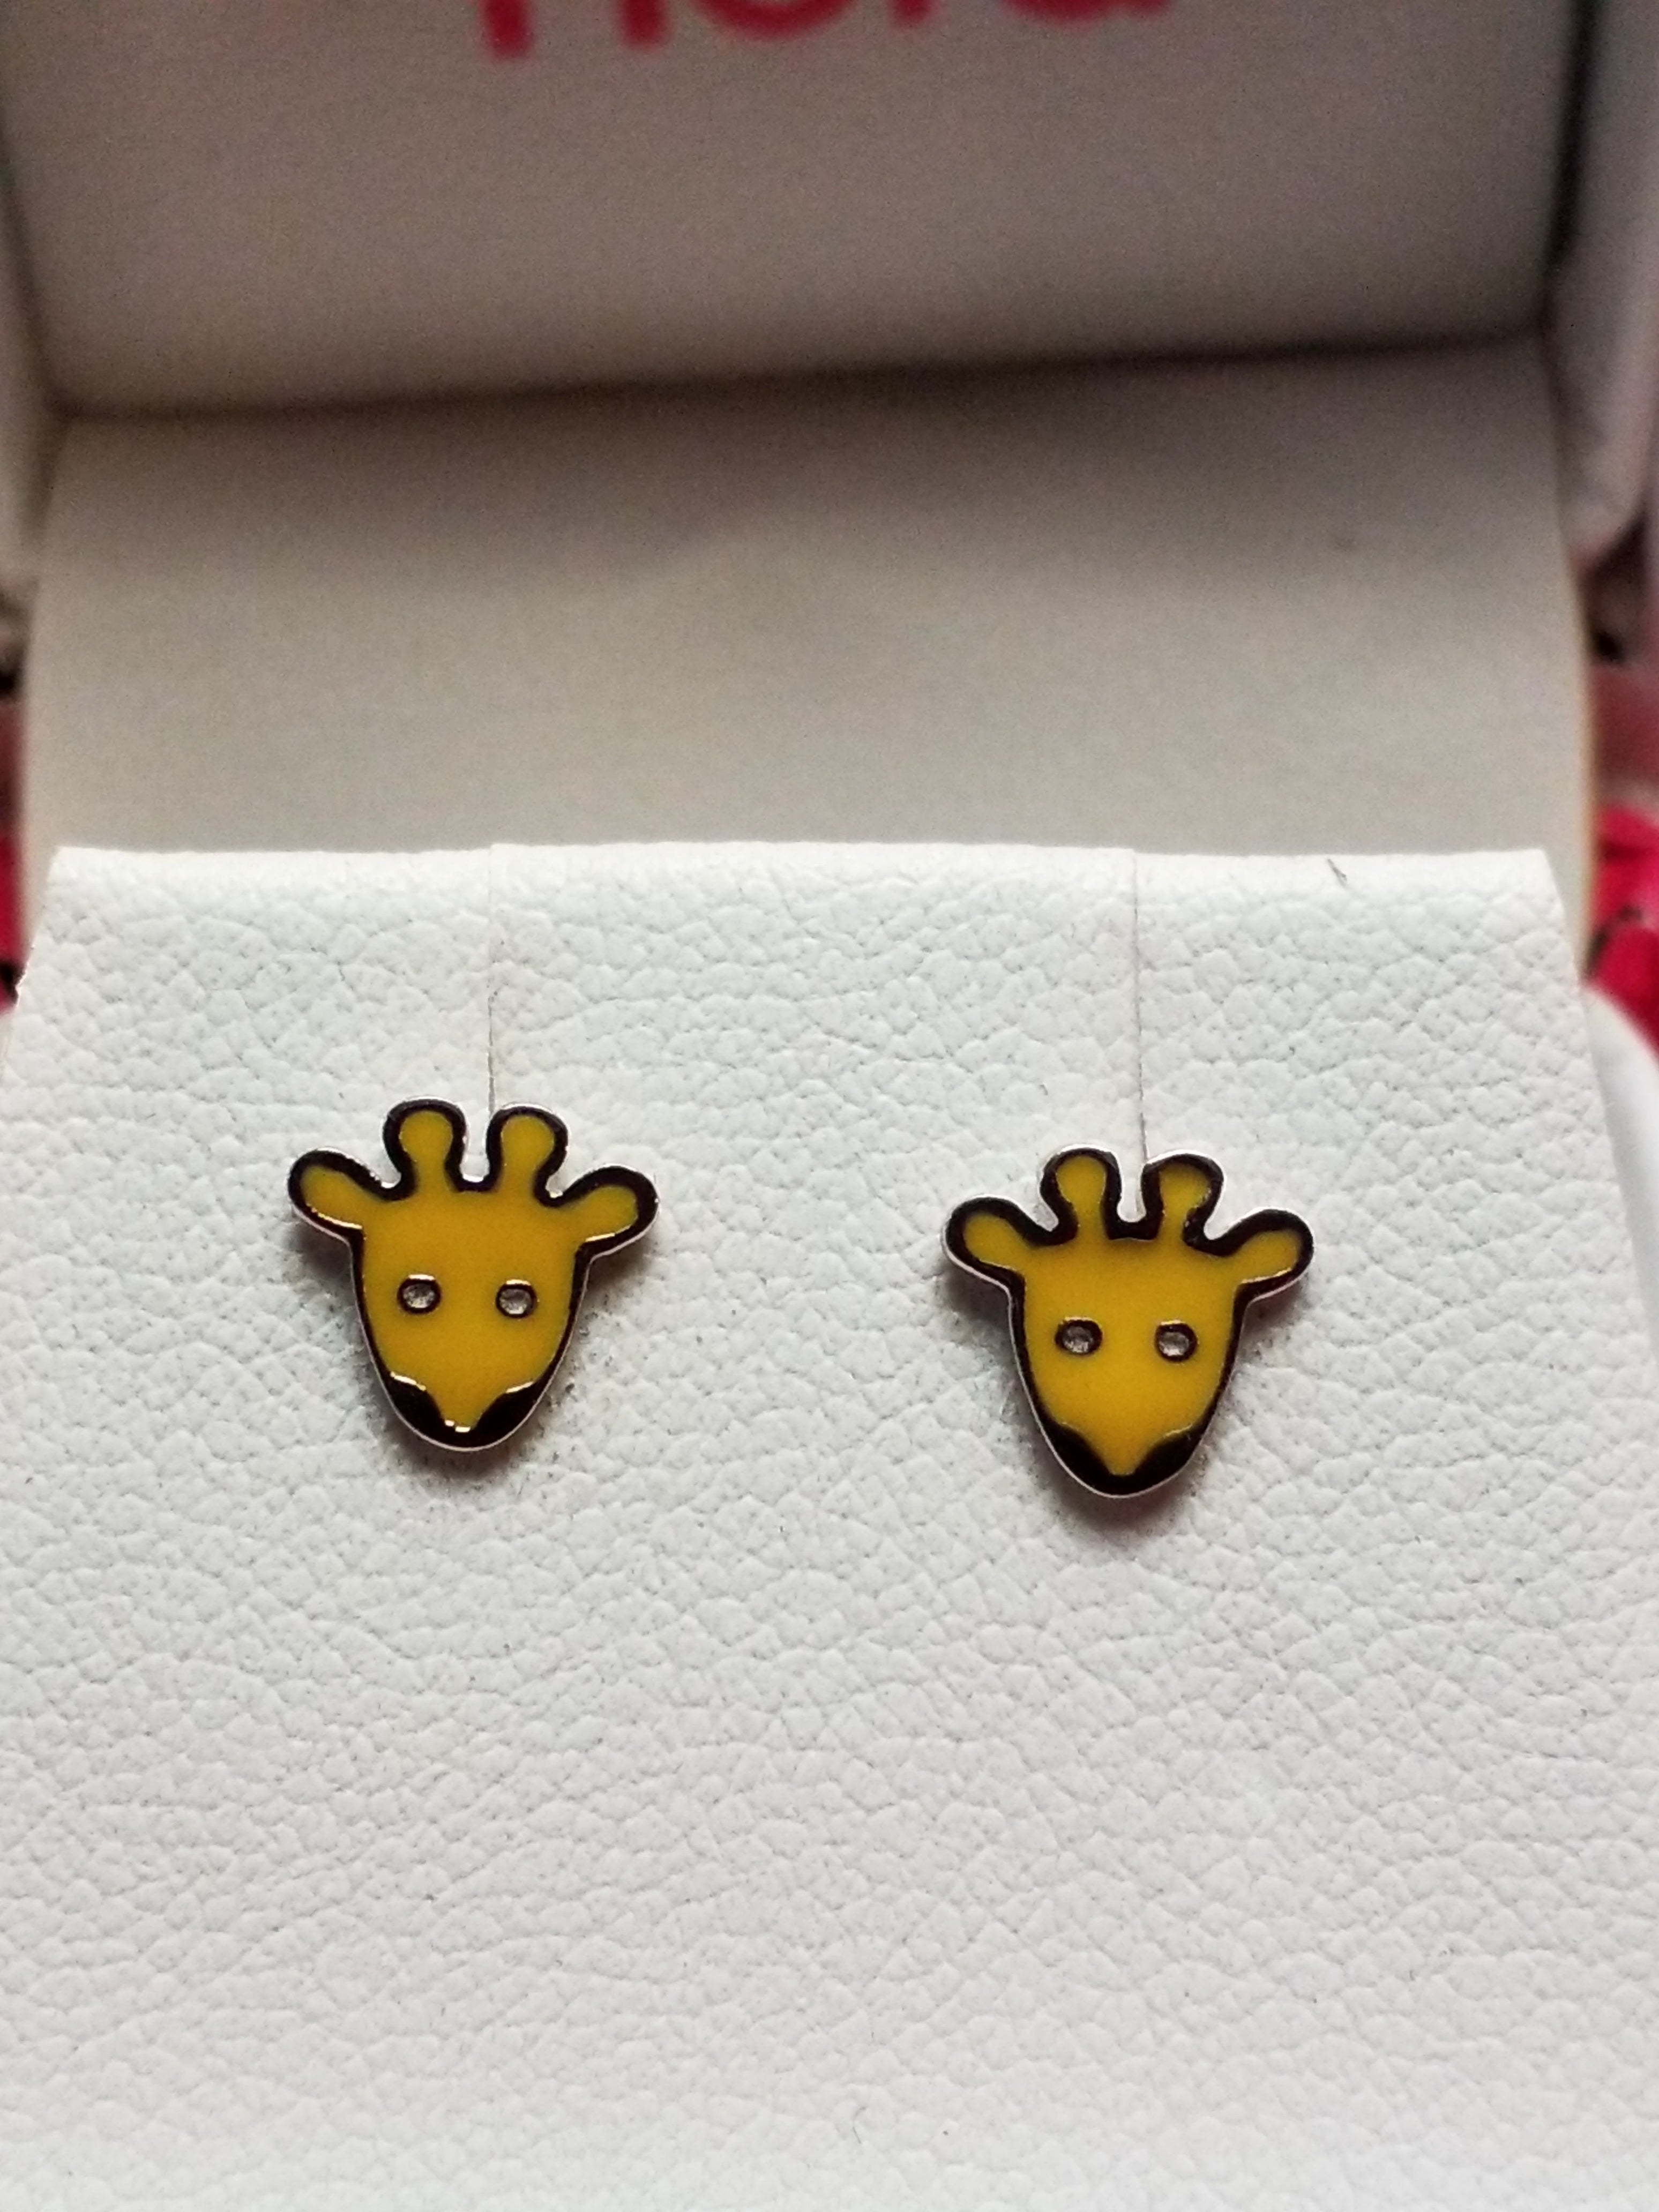 Children's Sterling Silver Earrings - Yellow Giraffes